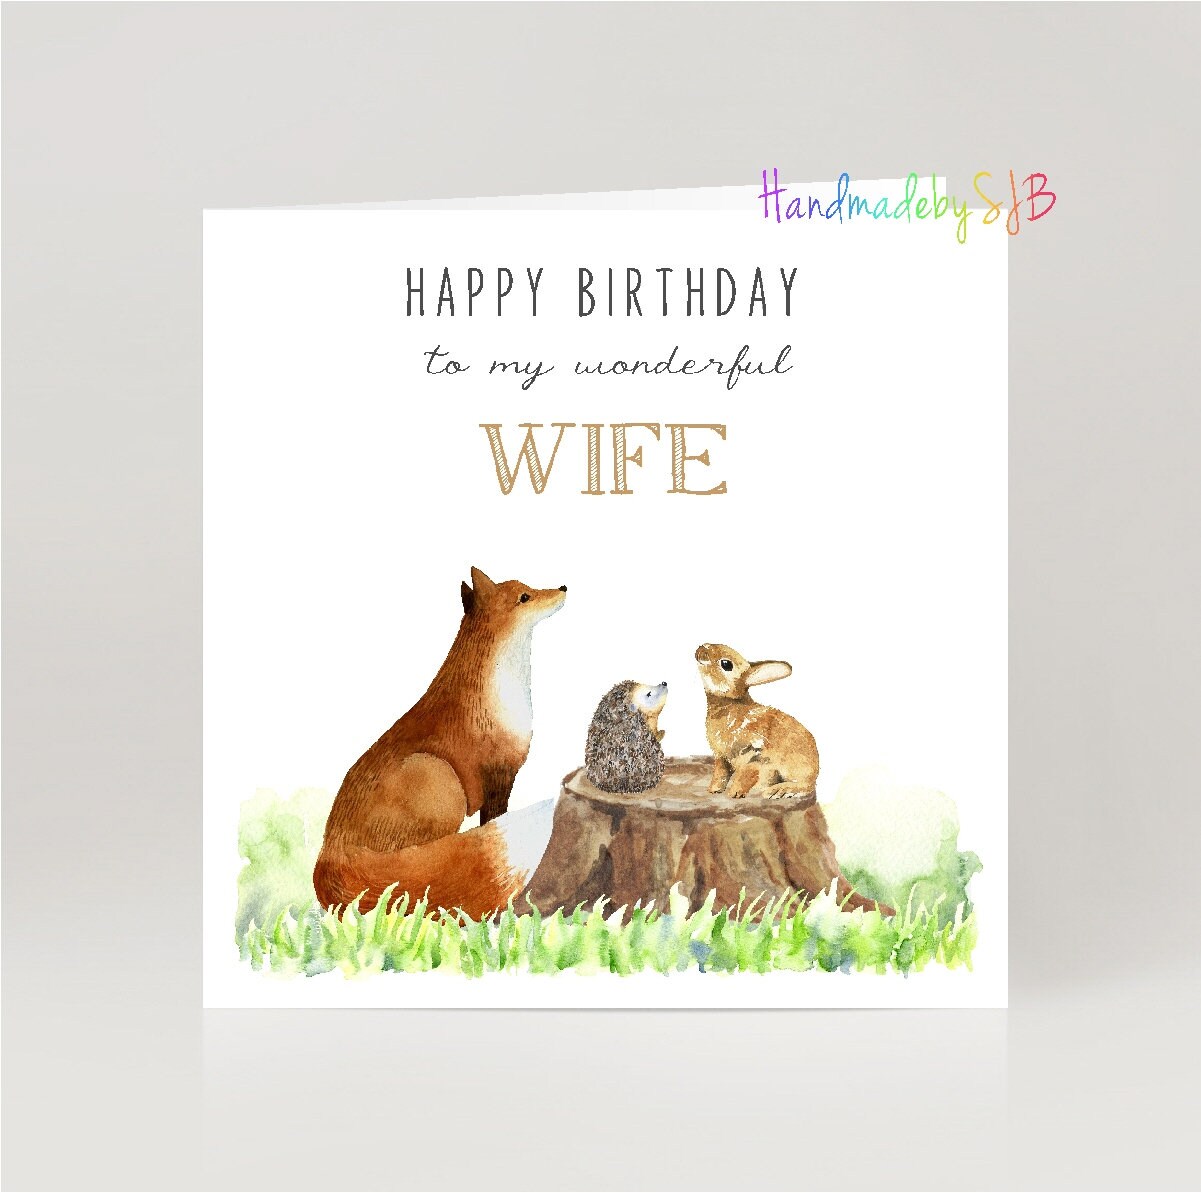 Birthday Card Thank You Card Hedgehog Greeting Card Greeting Card Card Blank Inside Hedgehog Card Rodent Card Animal Card